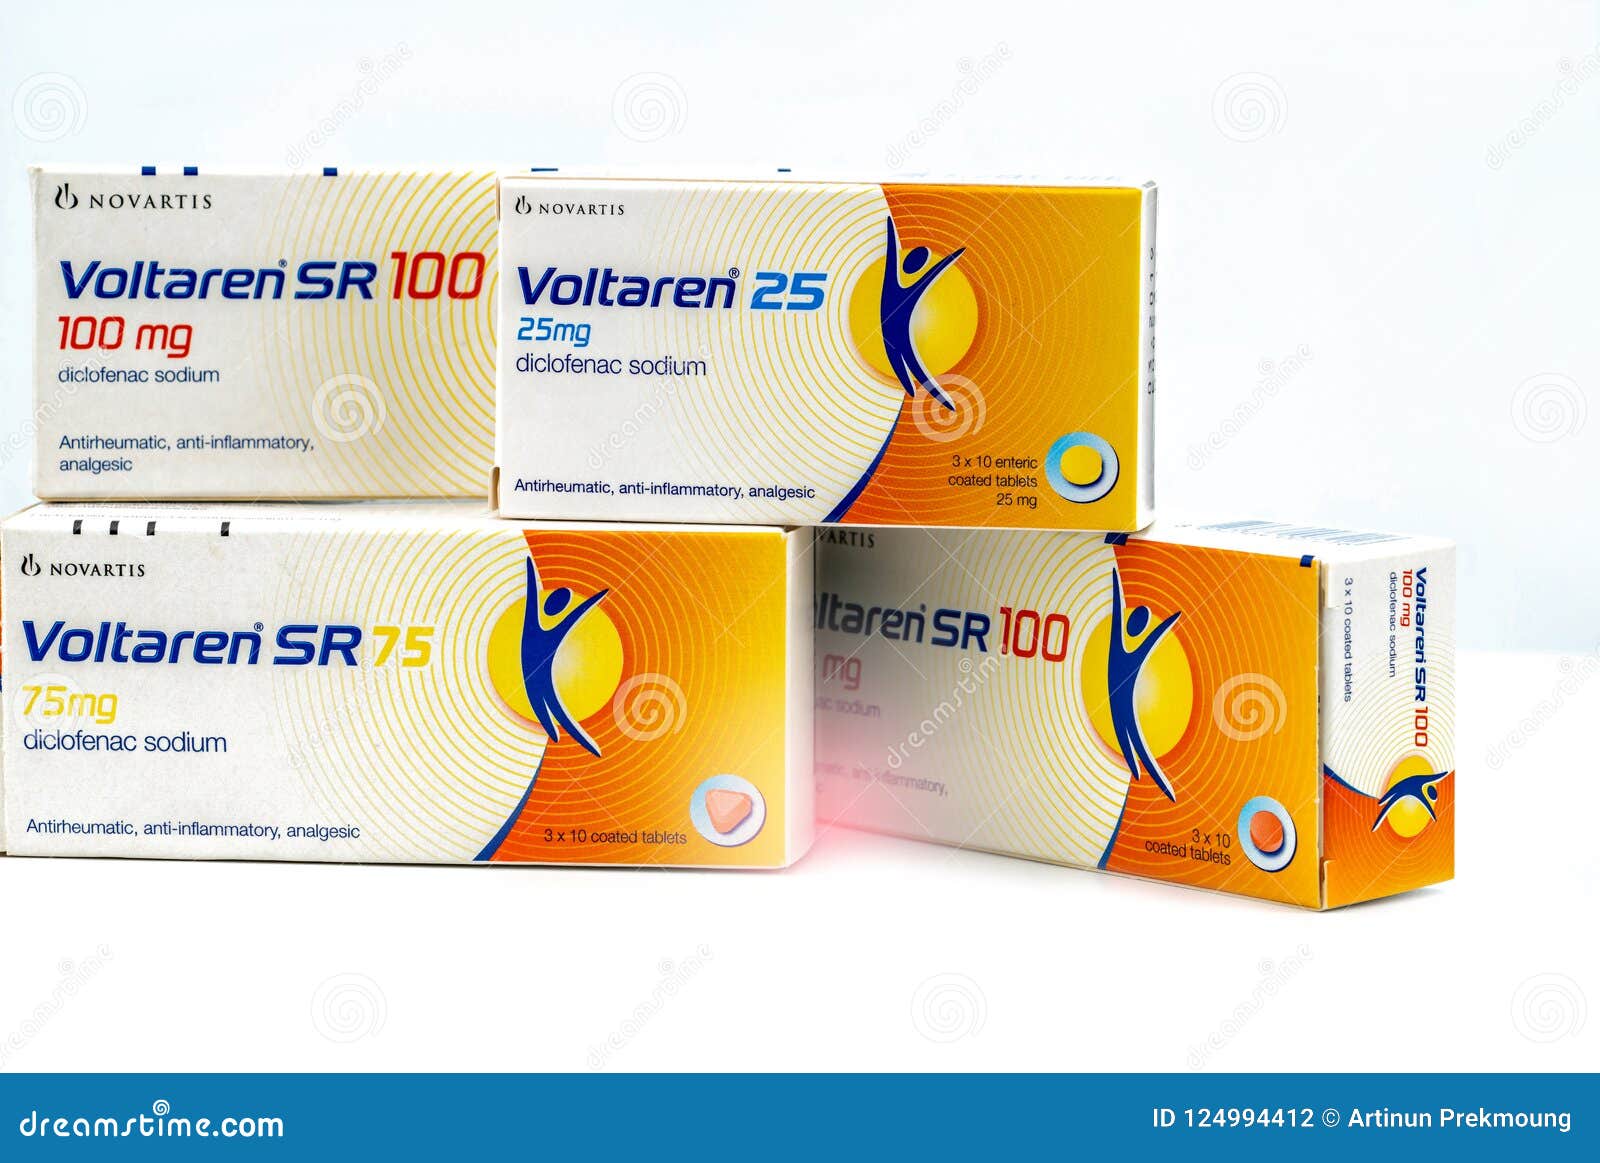 Voltaren 25 Mg, 75 Mg, 100 Mg. Diclofenac Sodium Product of Novartis  Editorial Photography - Image of drug, packaging: 124994412